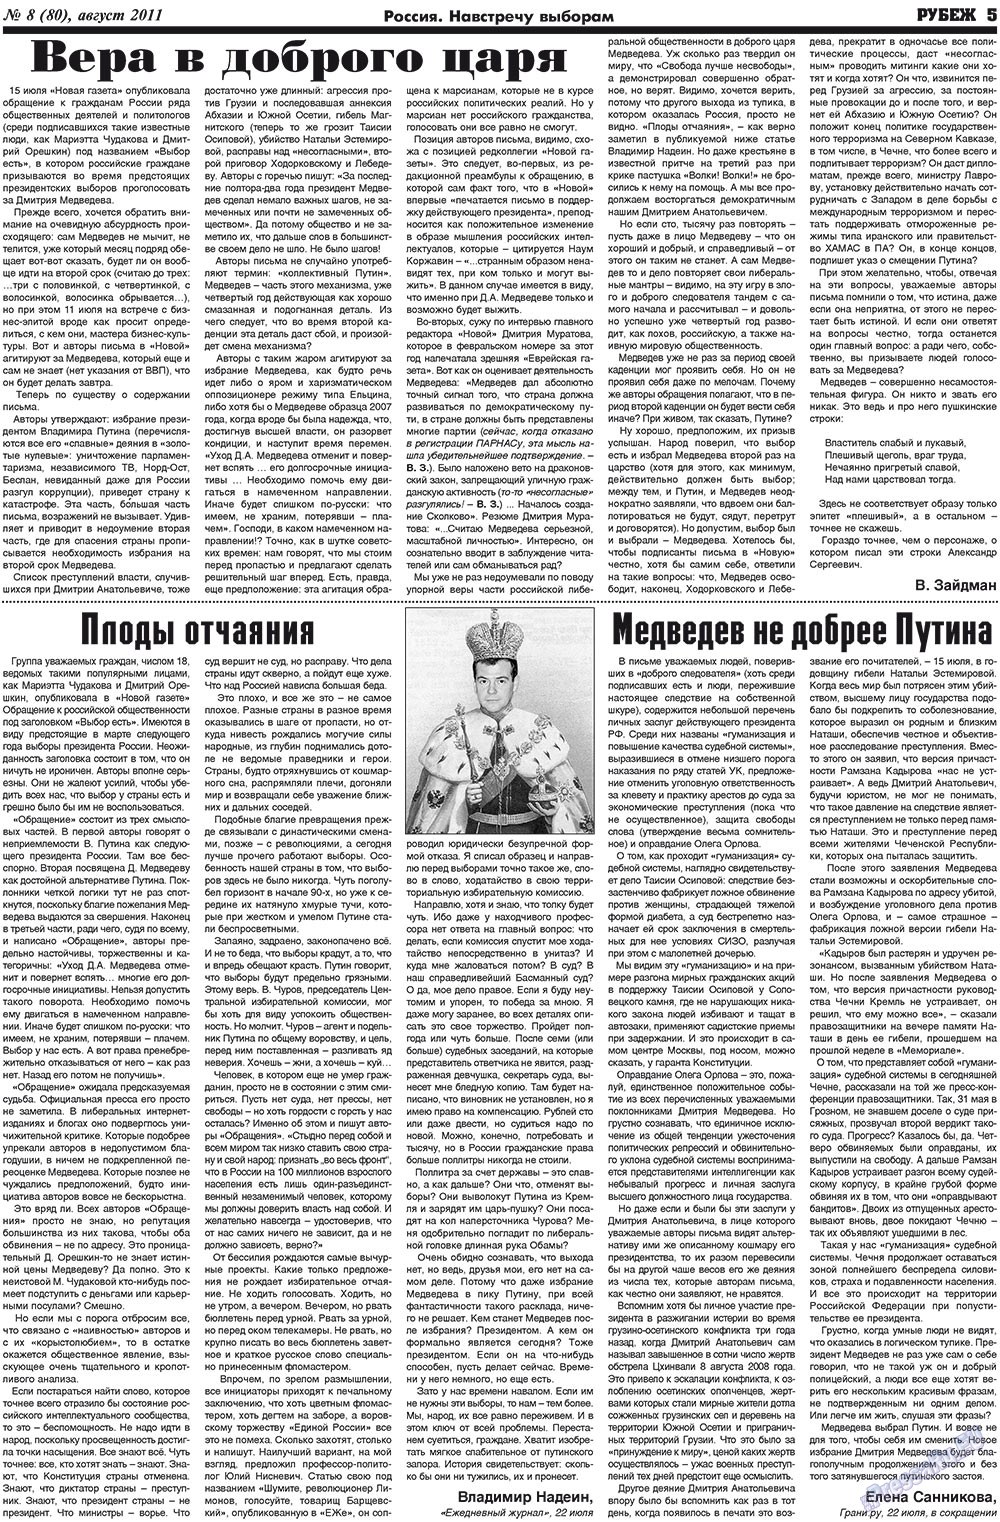 Рубеж, газета. 2011 №8 стр.5